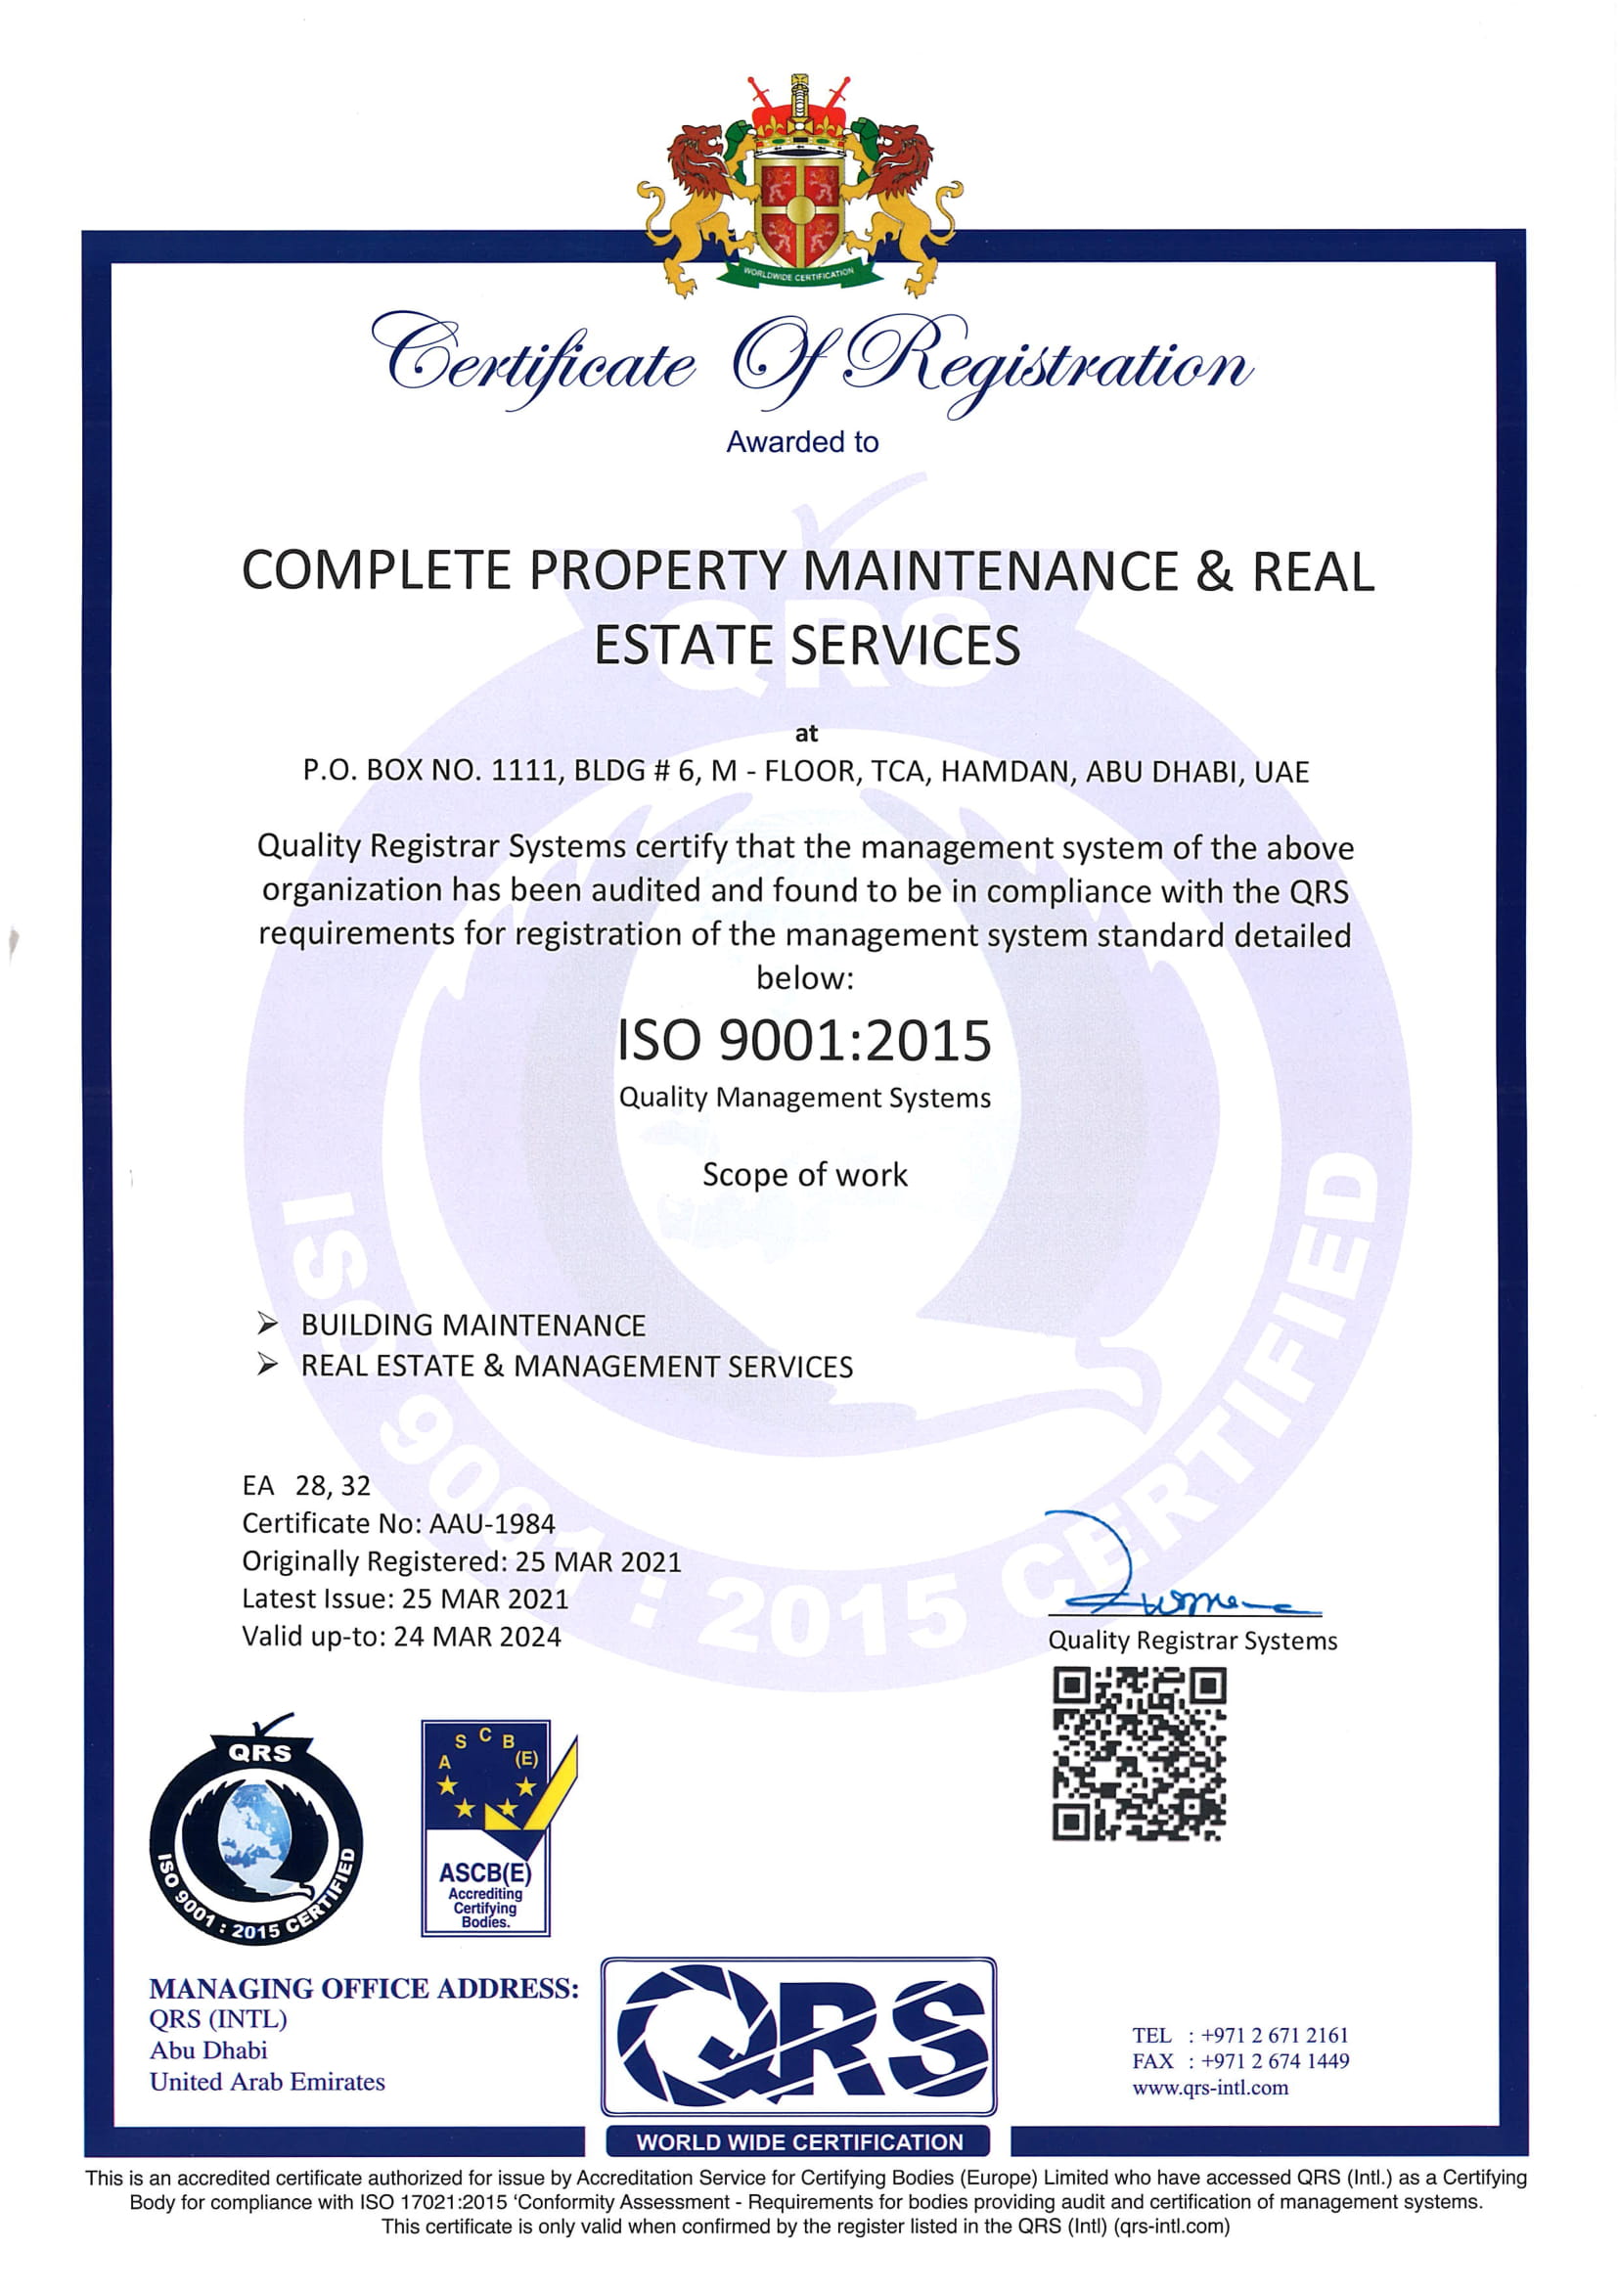 Certificate No: AAU 1984 Certificate Verification